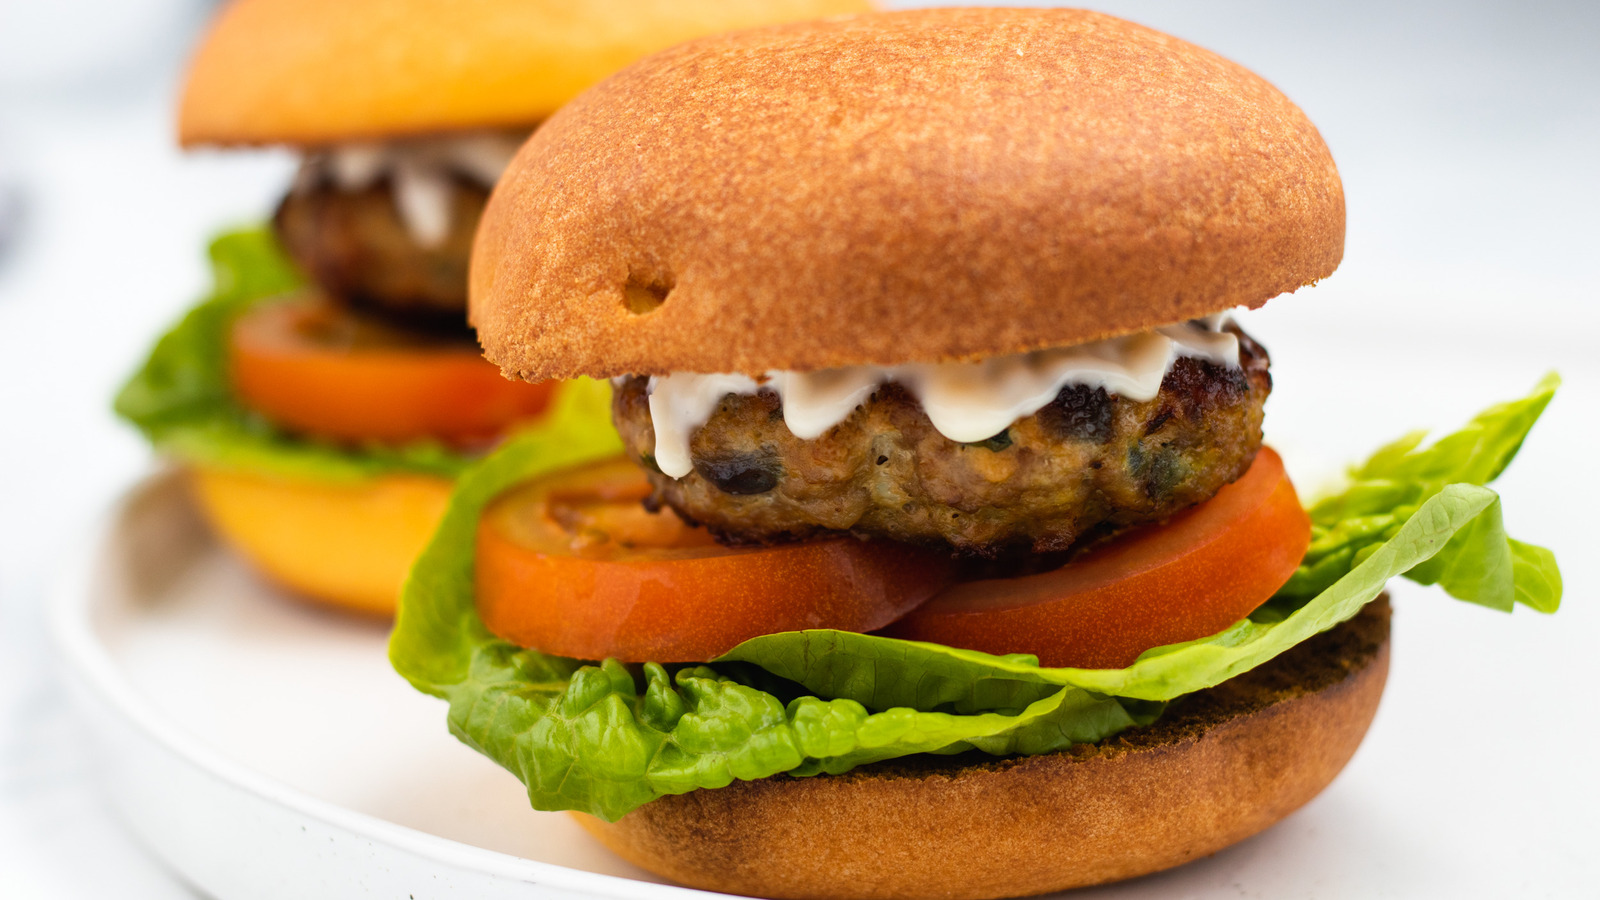 The Juiciest Turkey Burger Recipe - Super Healthy Kids